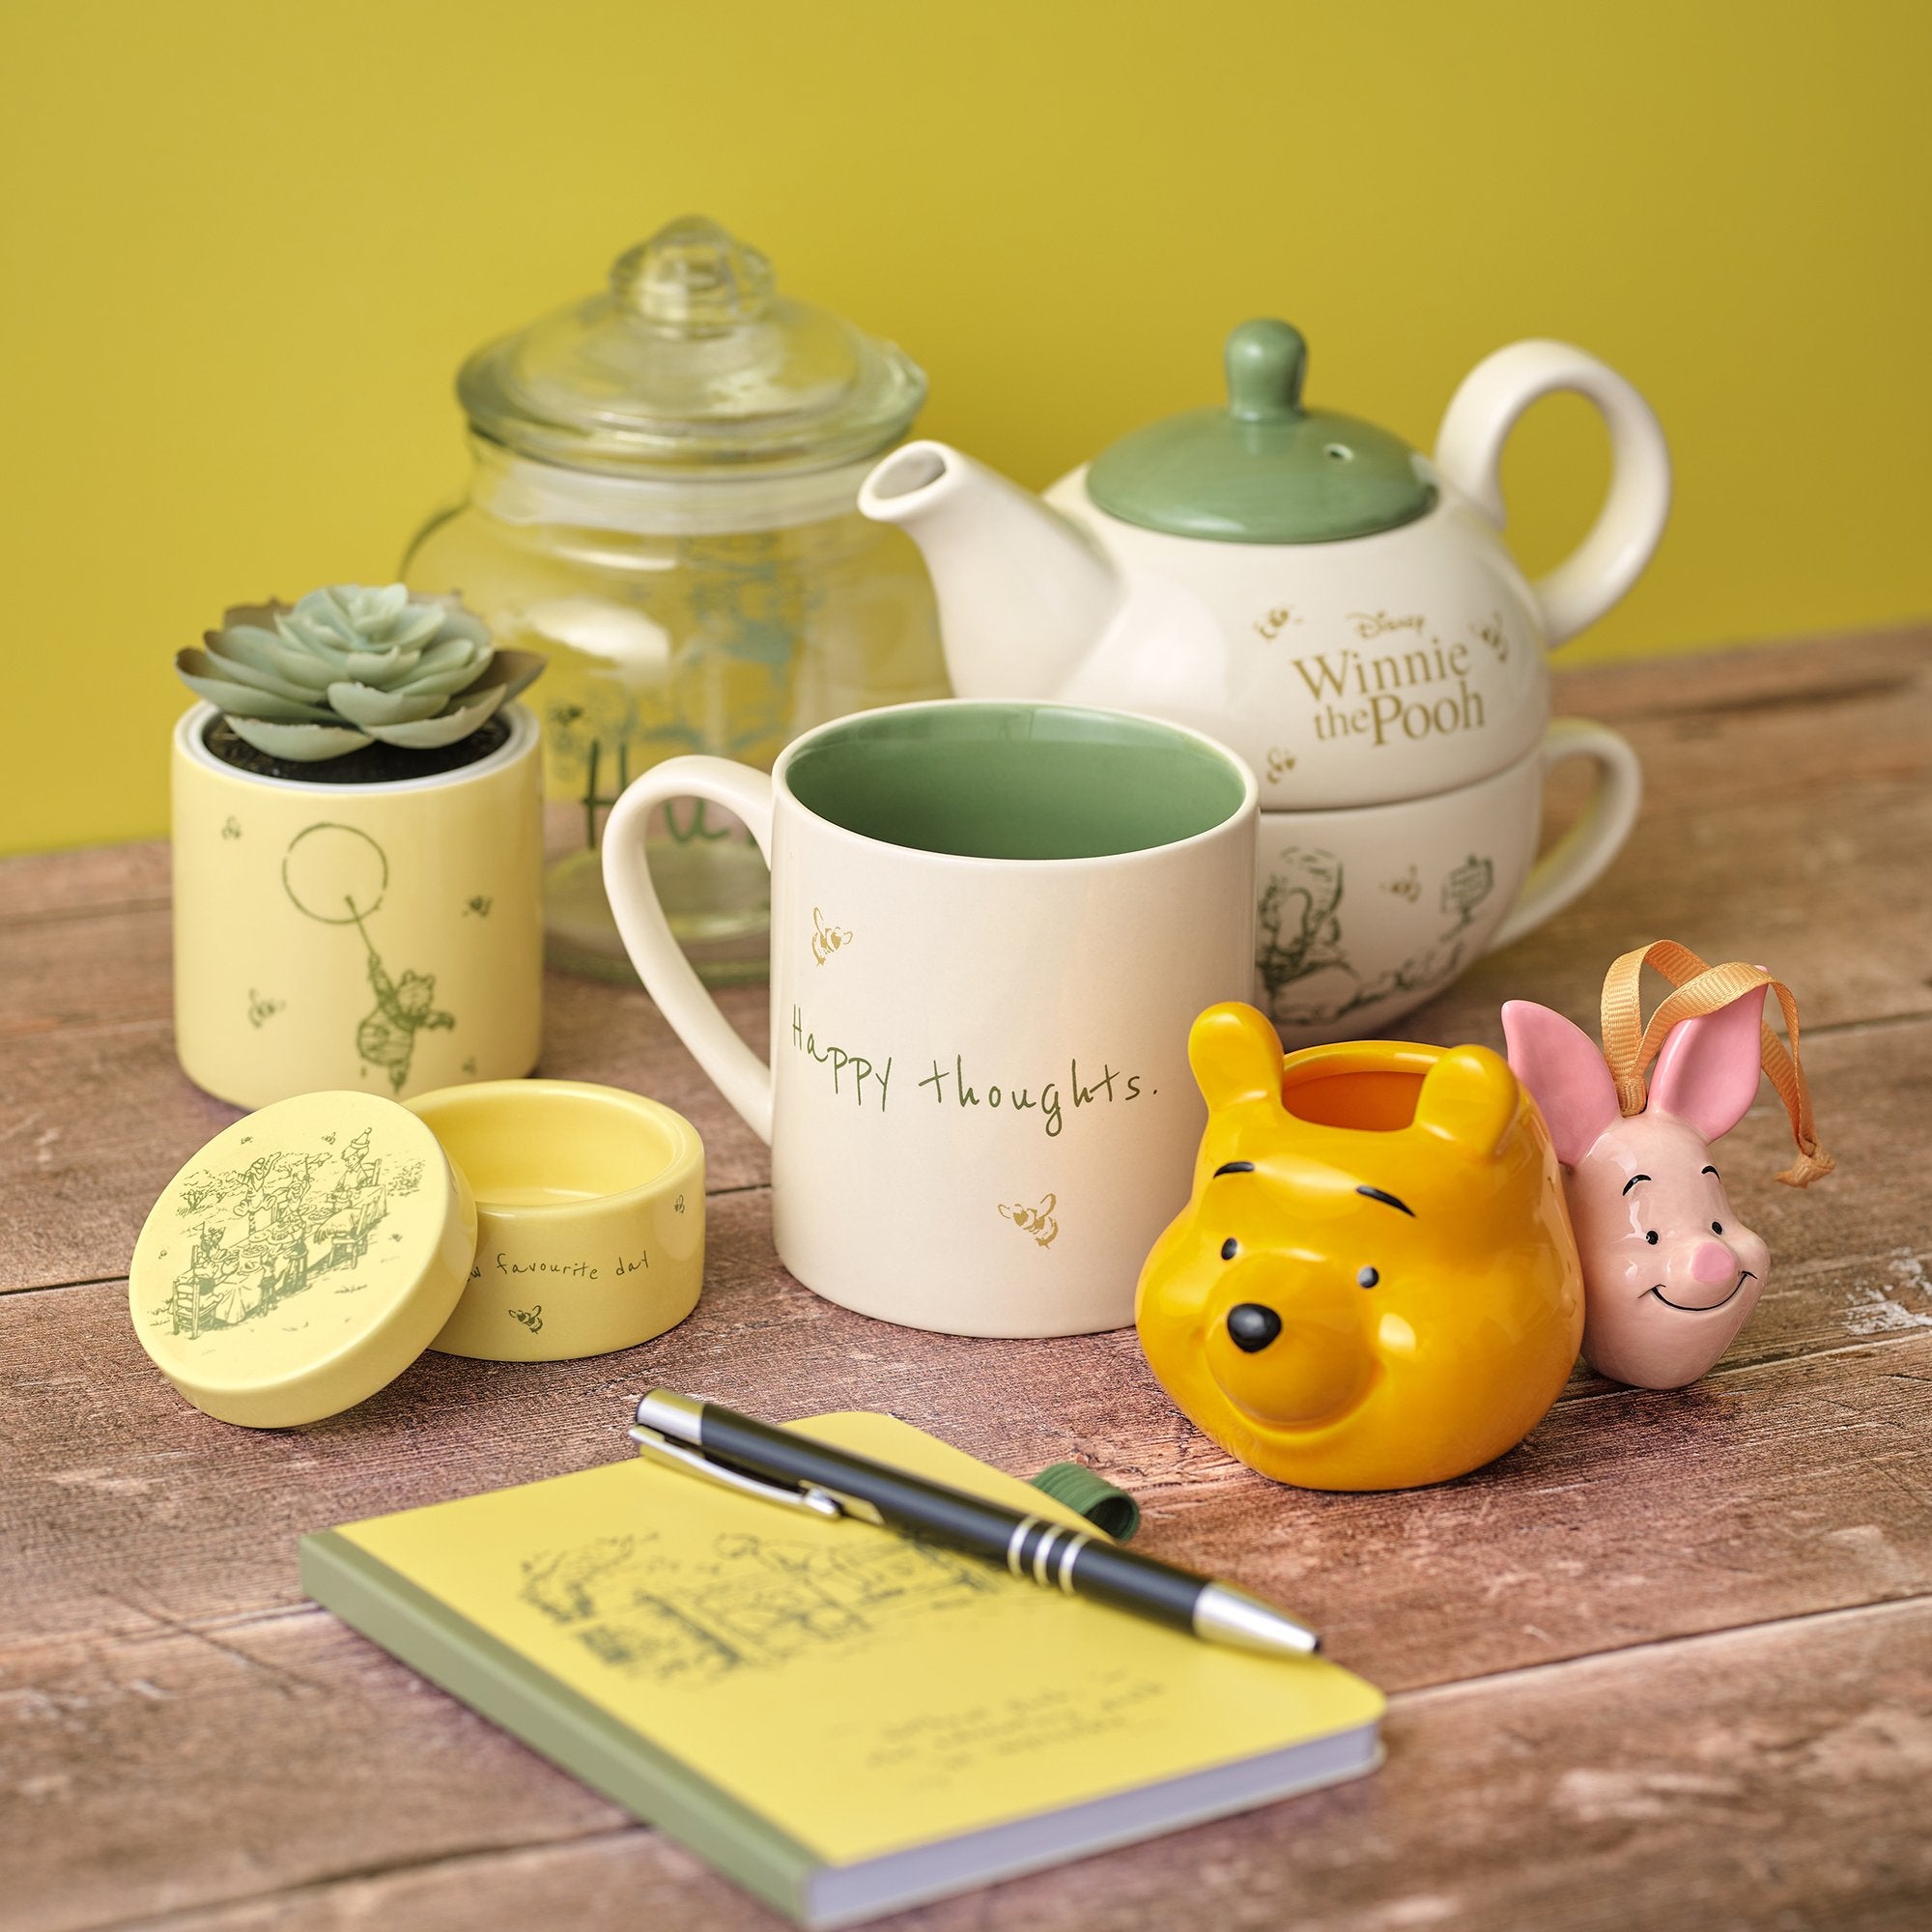 A6 Notebook - Disney Winnie the Pooh